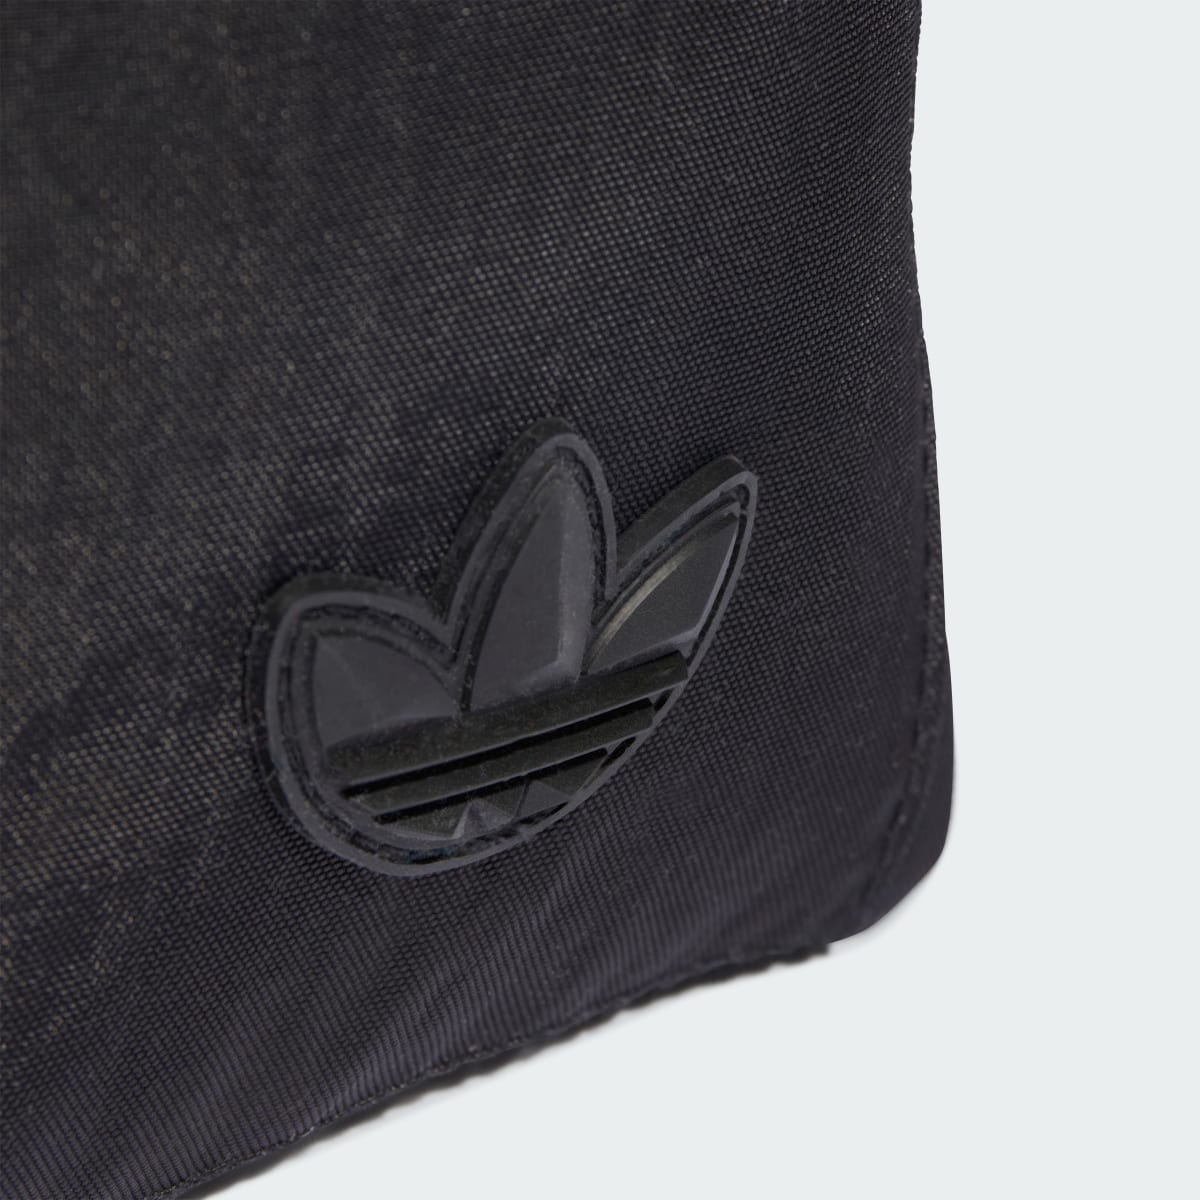 Adidas Adventure Flap Bag. 6